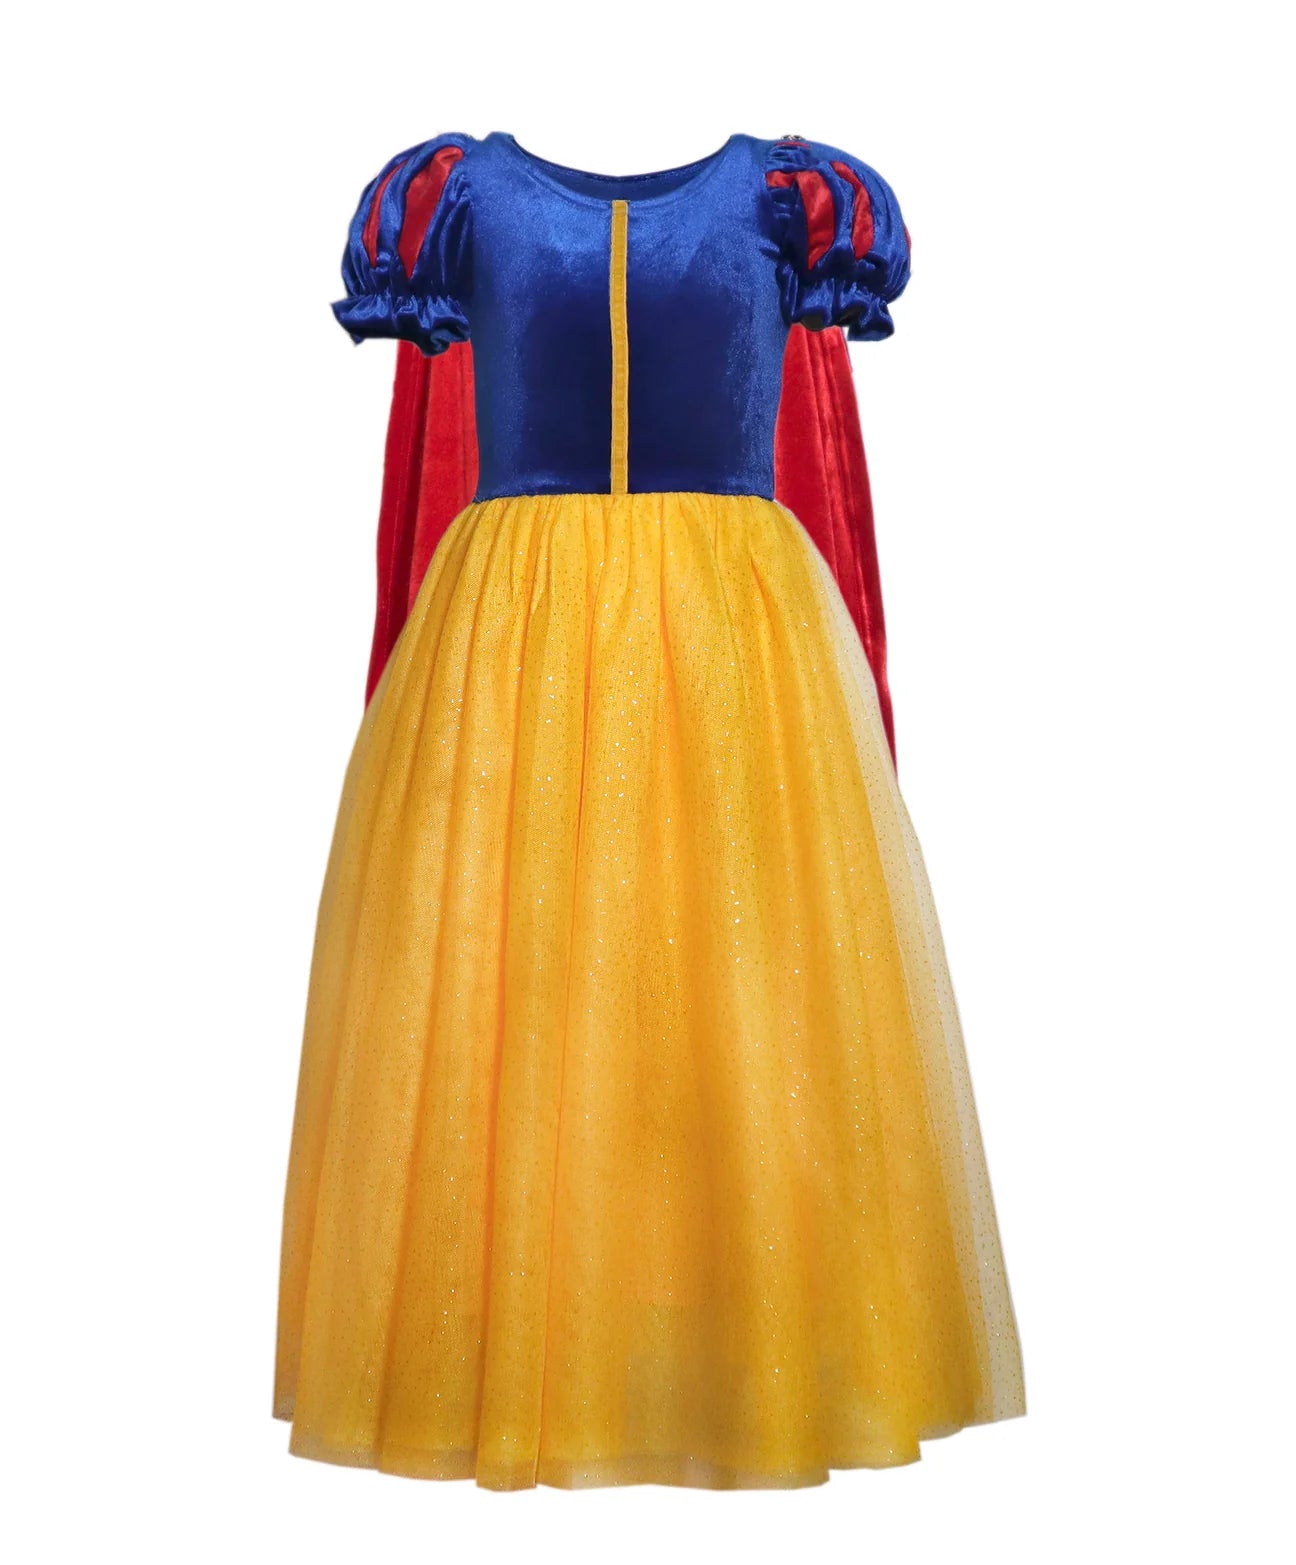 Joy by Teresita Orillac: Fairest Princess Costume Dress